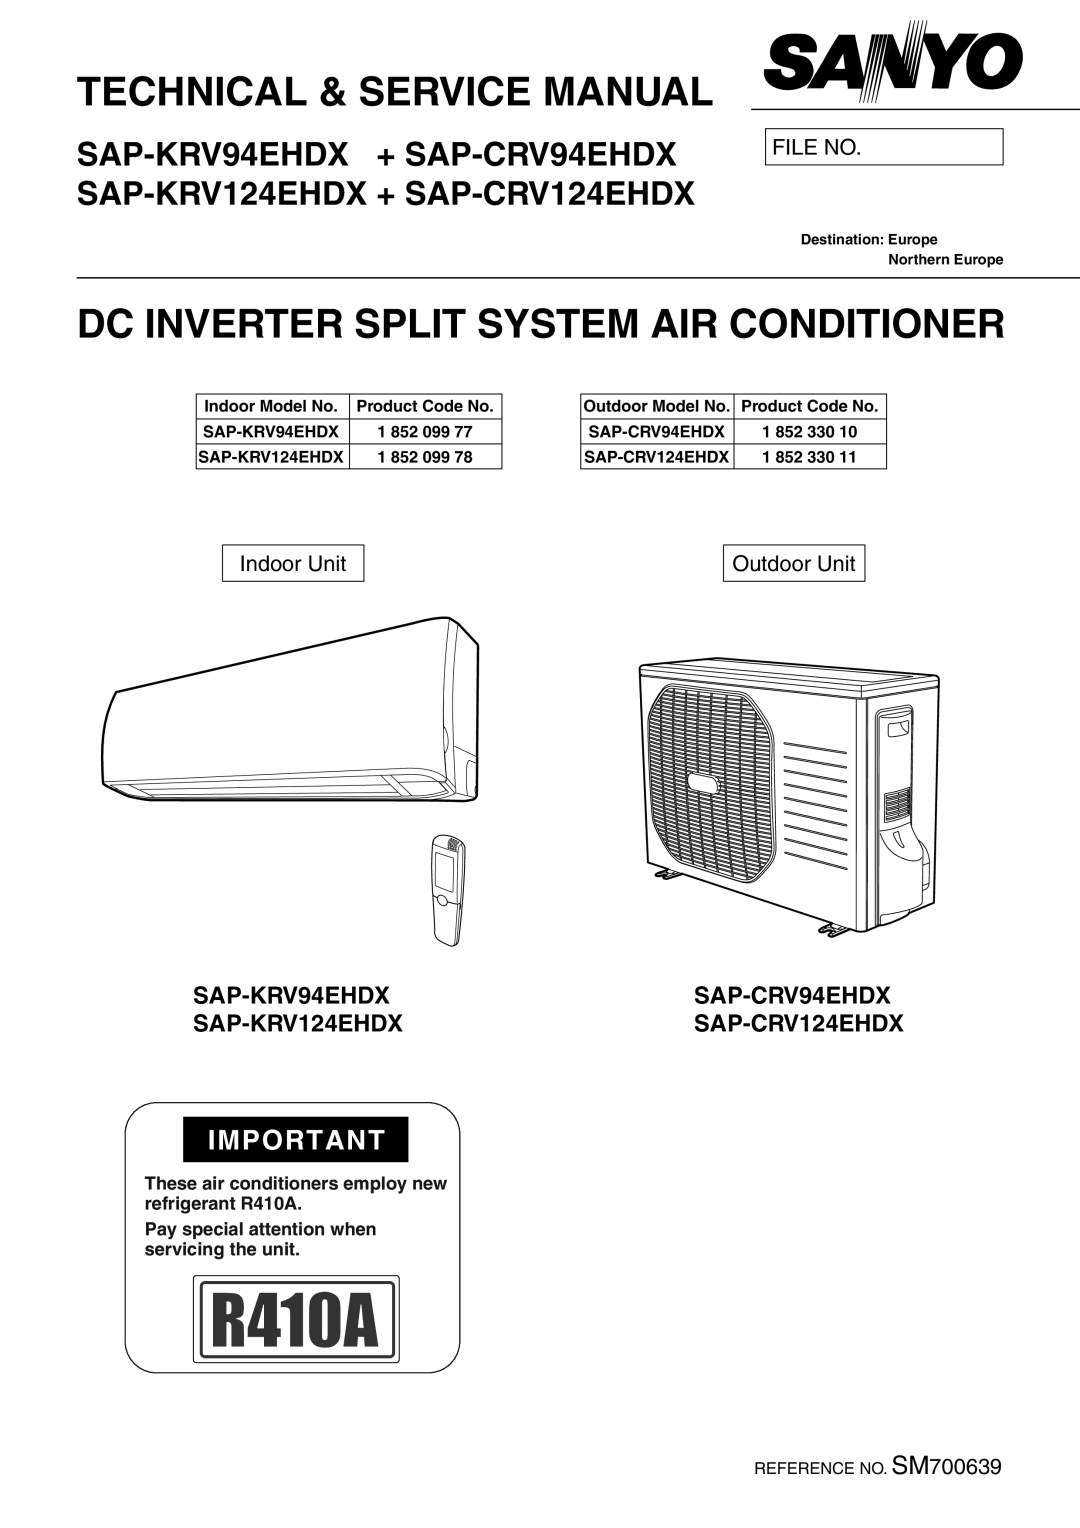 Sanyo SAP-KRV94EHDX service manual File No, Indoor Unit, Outdoor Unit, Dc Inverter Split System Air Conditioner, 1 852 